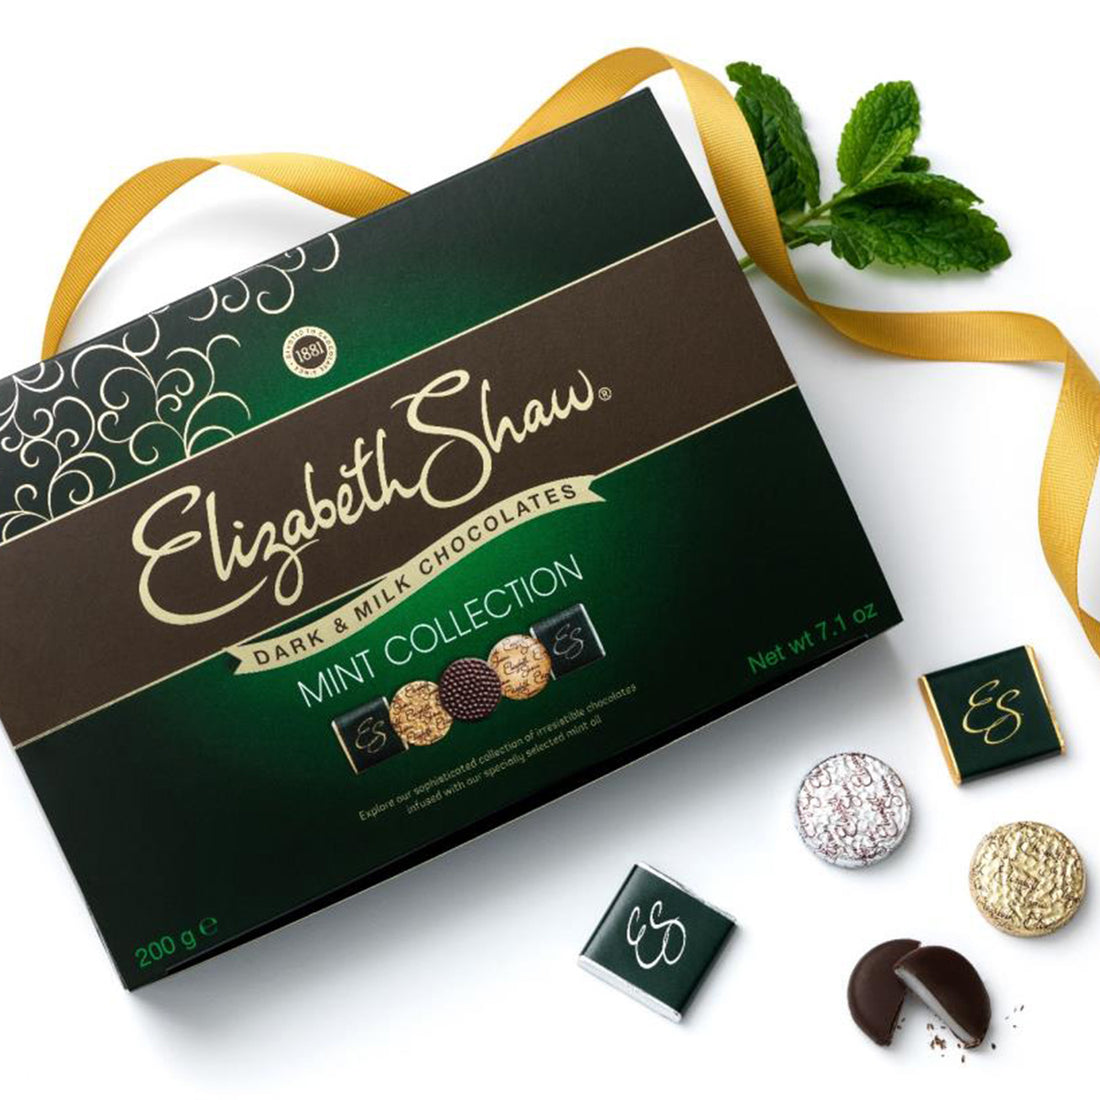 Elizabeth Shaw, Elizabeth Shaw Dark & Milk Chocolate Mint Collection (200g), Redber Coffee